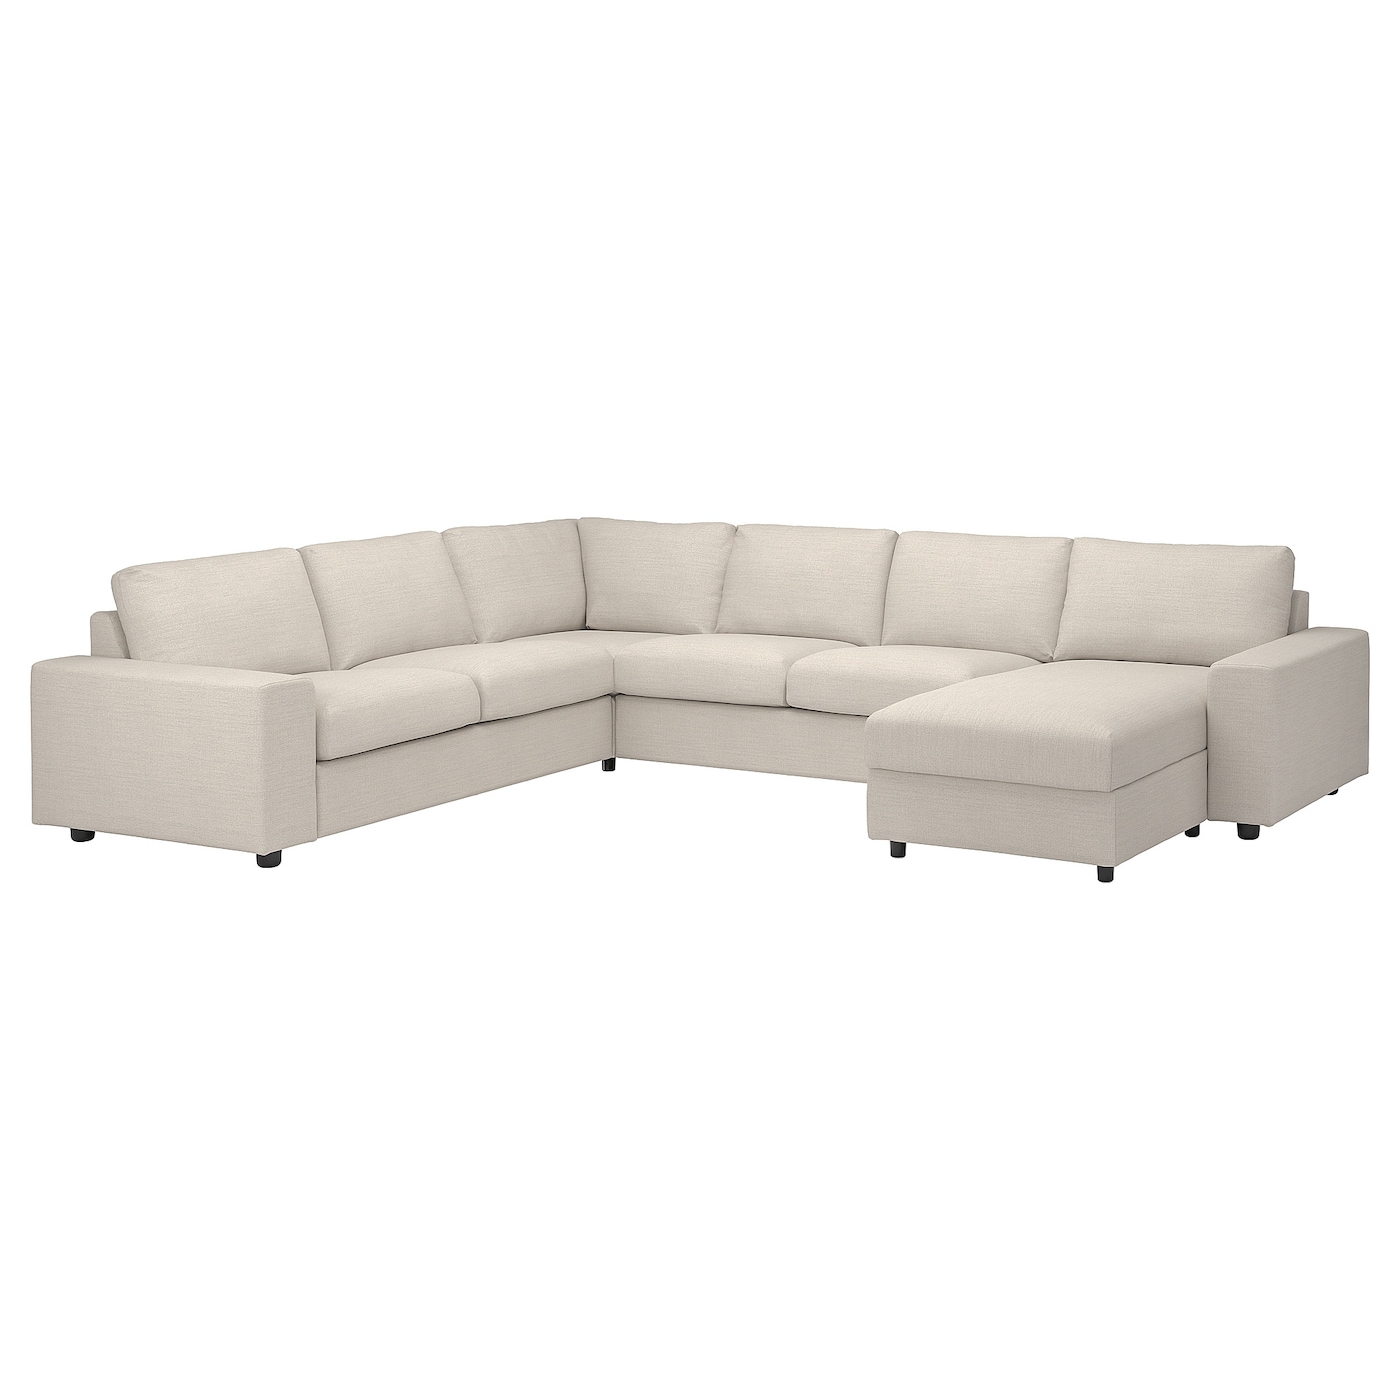 ВИМЛЕ Диван угловой, 5-местный. диван+диван, с широкими подлокотниками/Гуннаред бежевый VIMLE IKEA беллуно диван